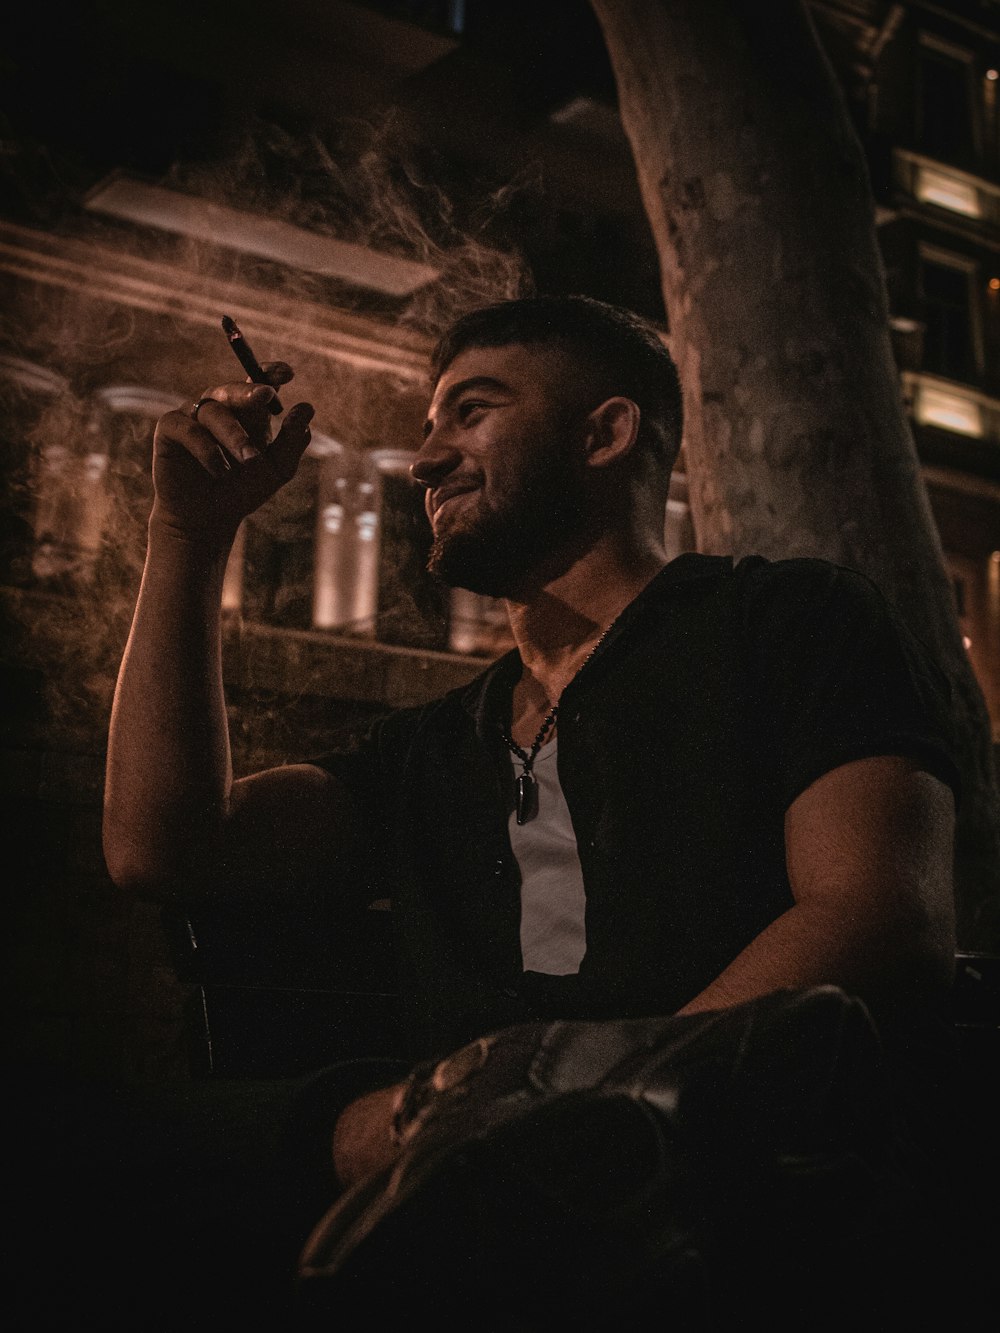 Man in black vest smoking cigarette photo – Free Baku Image on Unsplash